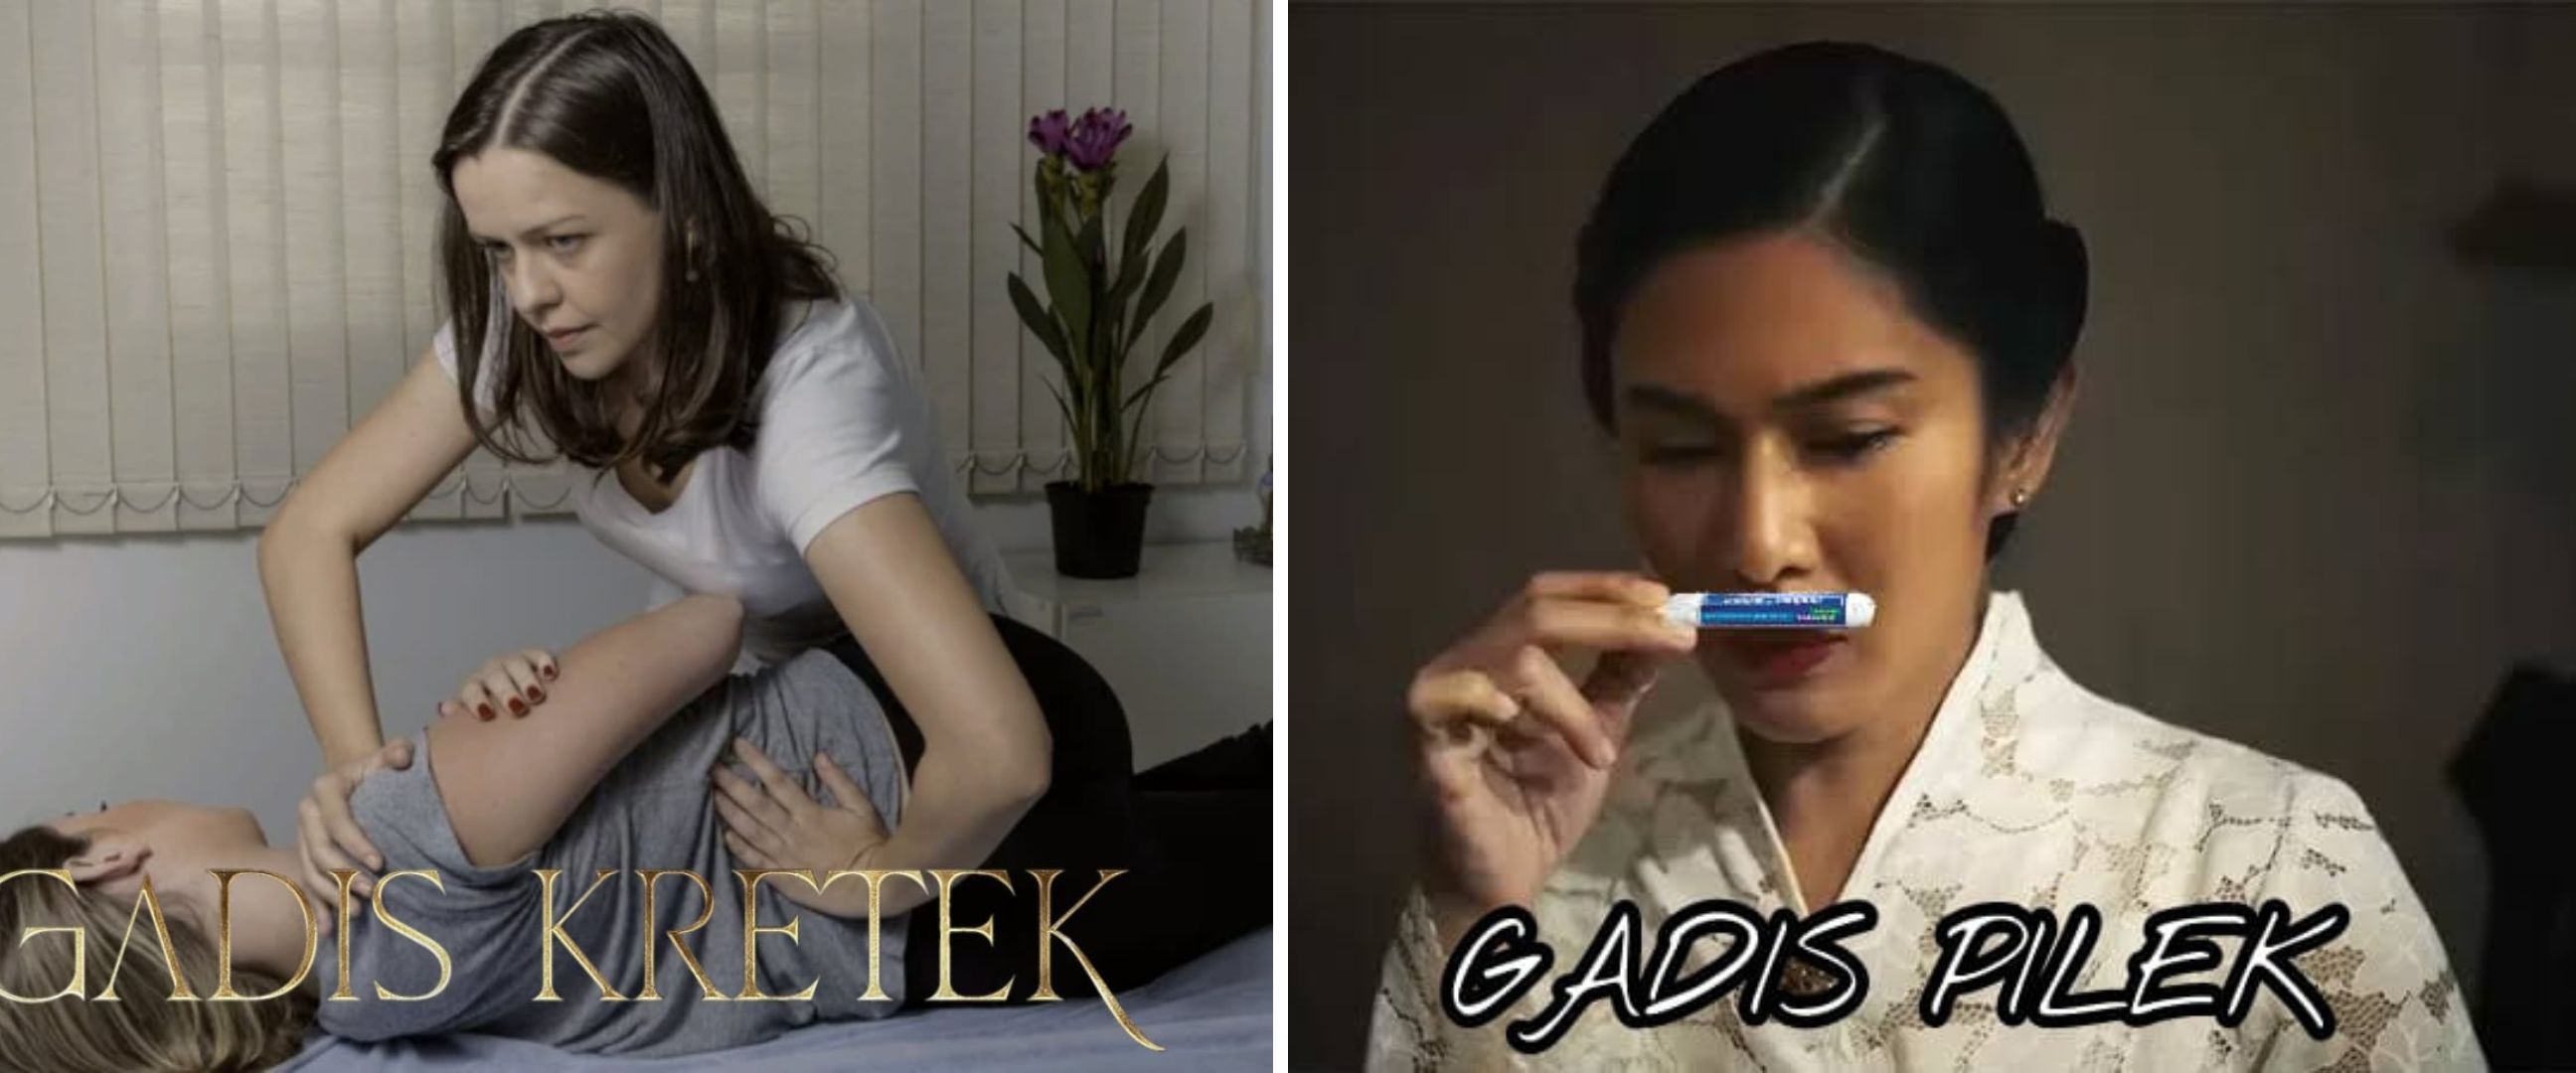 11 Potret kocak meme lucu dari film Gadis Kretek, kreativitas warga +62 emang bikin melongo